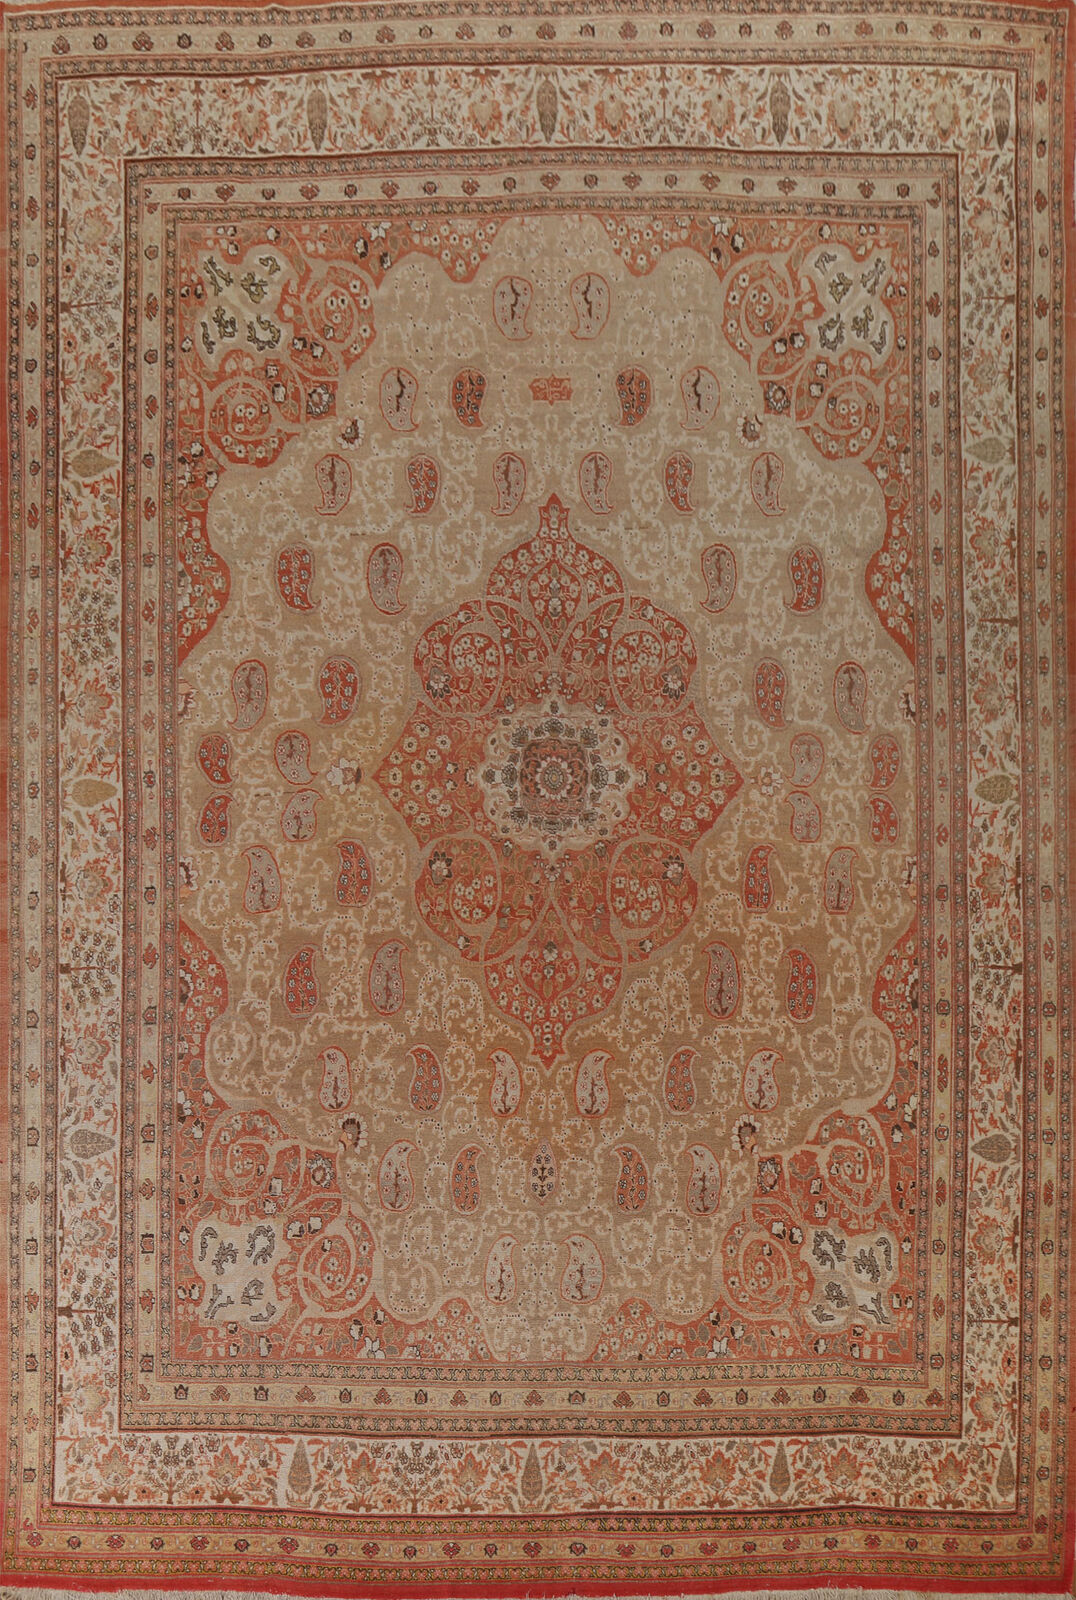 Pre-1900 Tebriz Haj Jalili Vegetable Dye Antique Rug 10x13 Handmade Wool Carpet